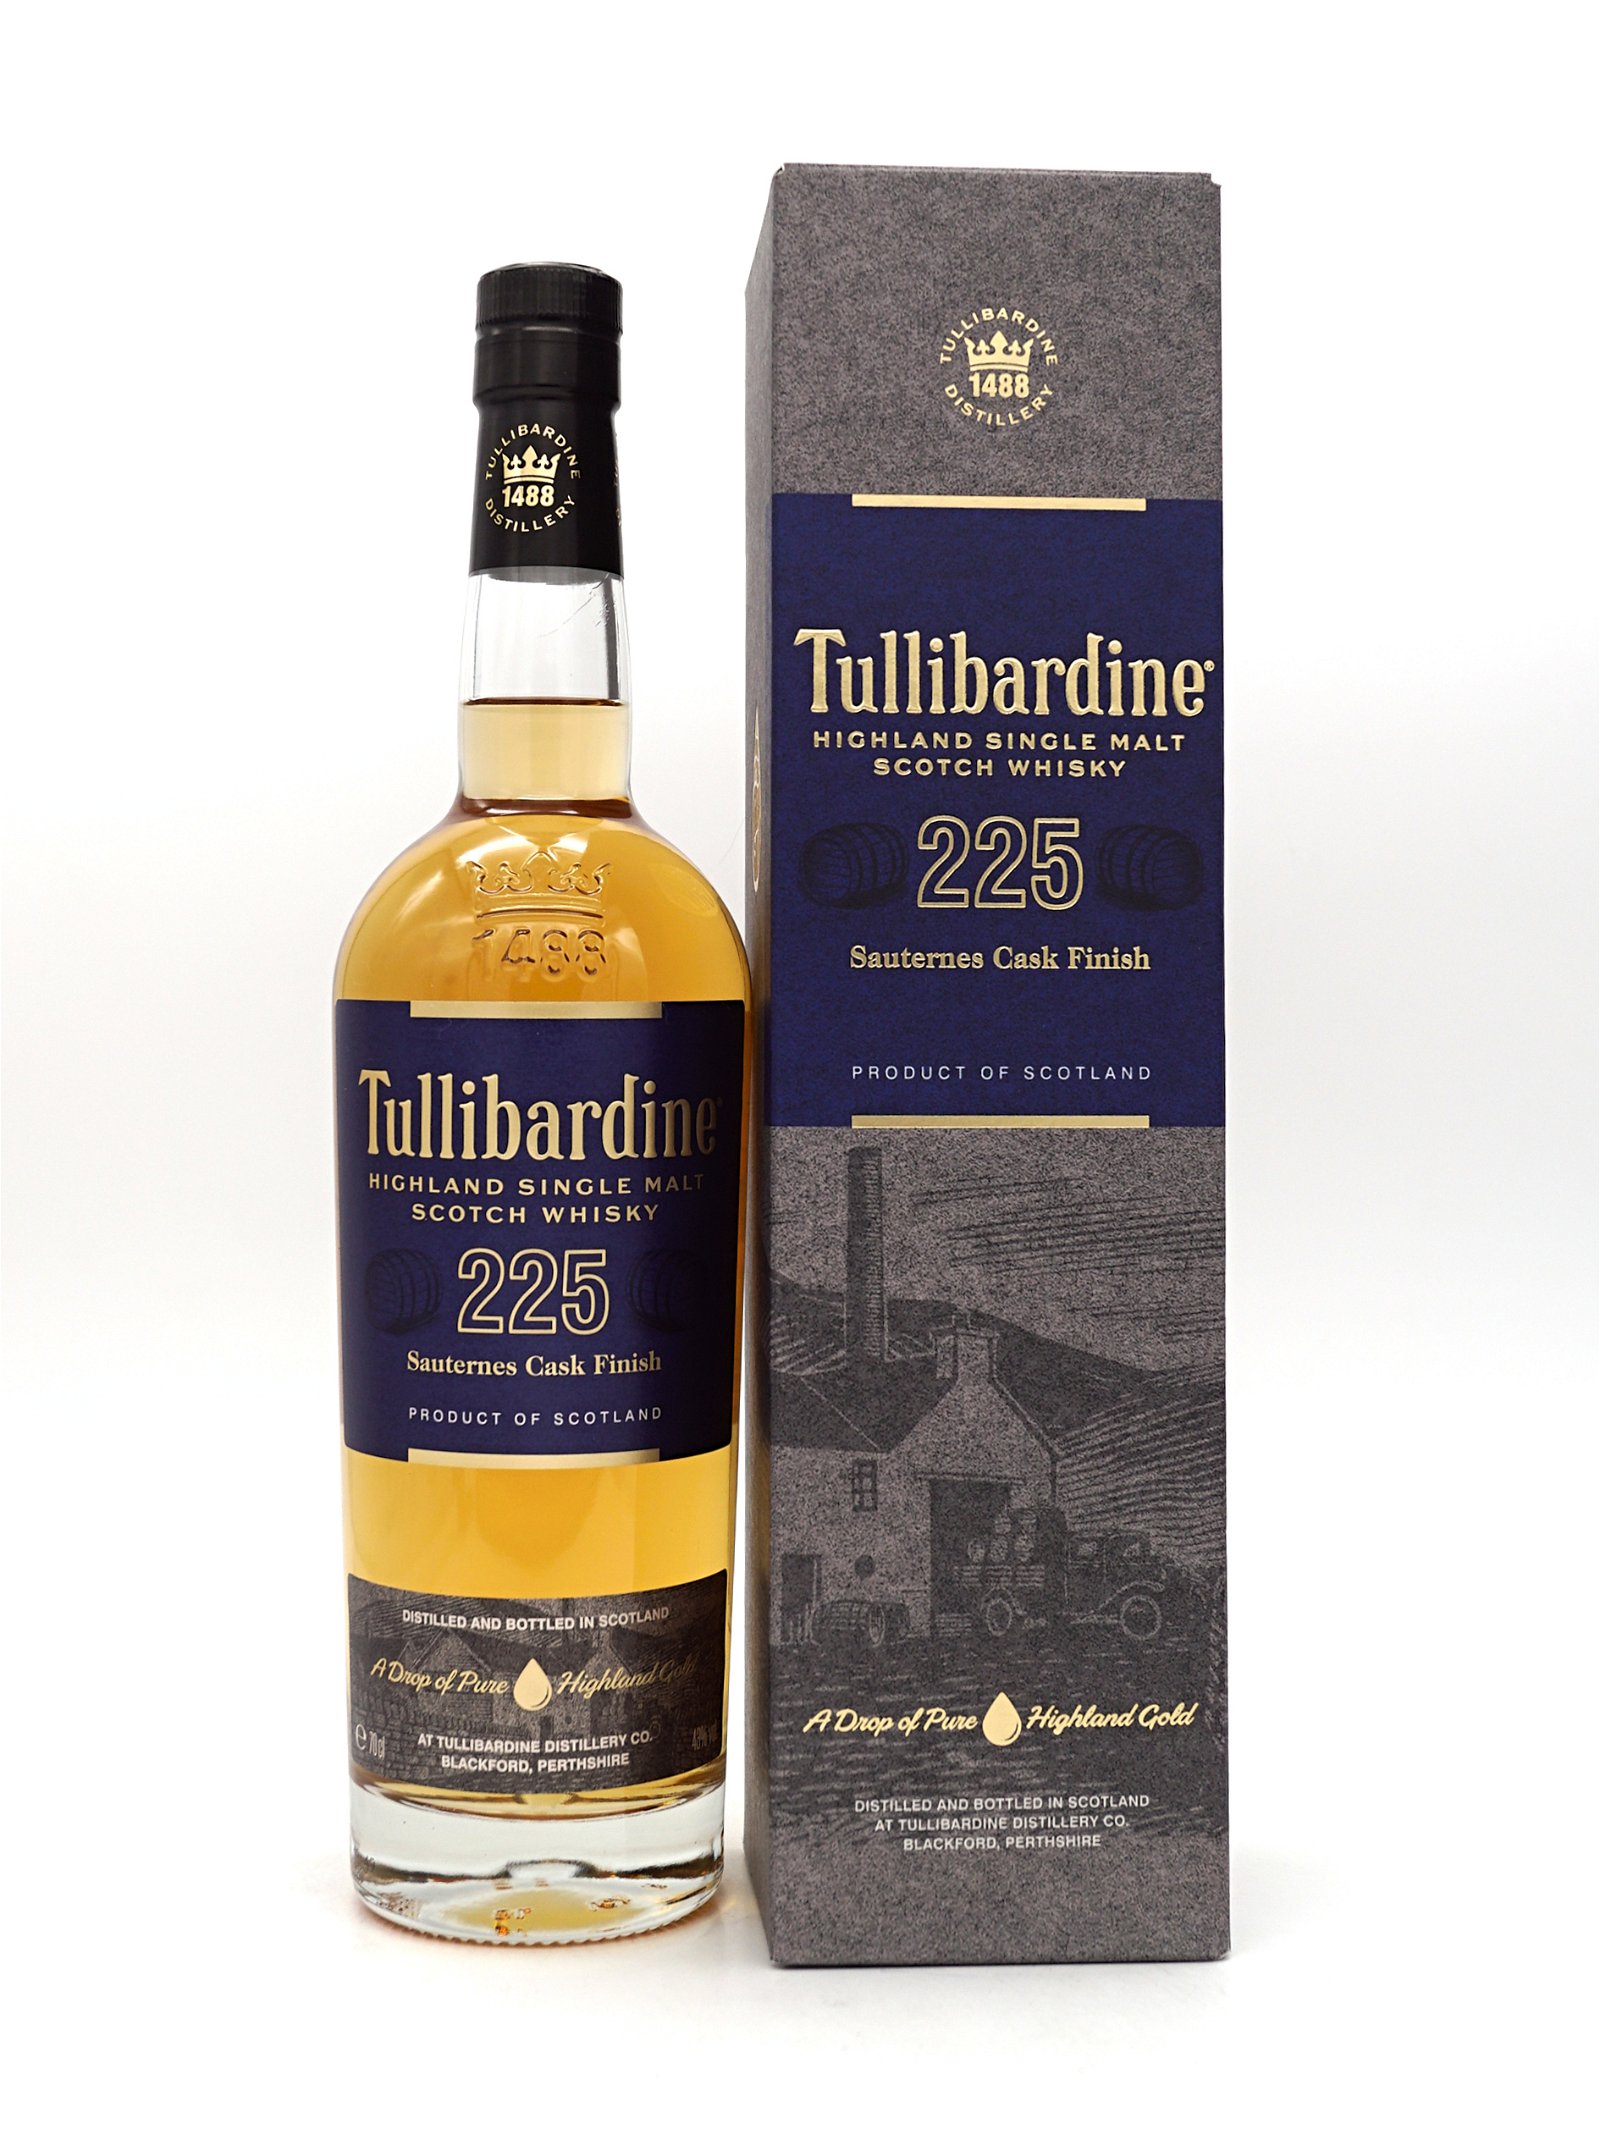 Tullibardine 225 Sauternes Cask Finish Highland Single Malt Scotch Whisky 